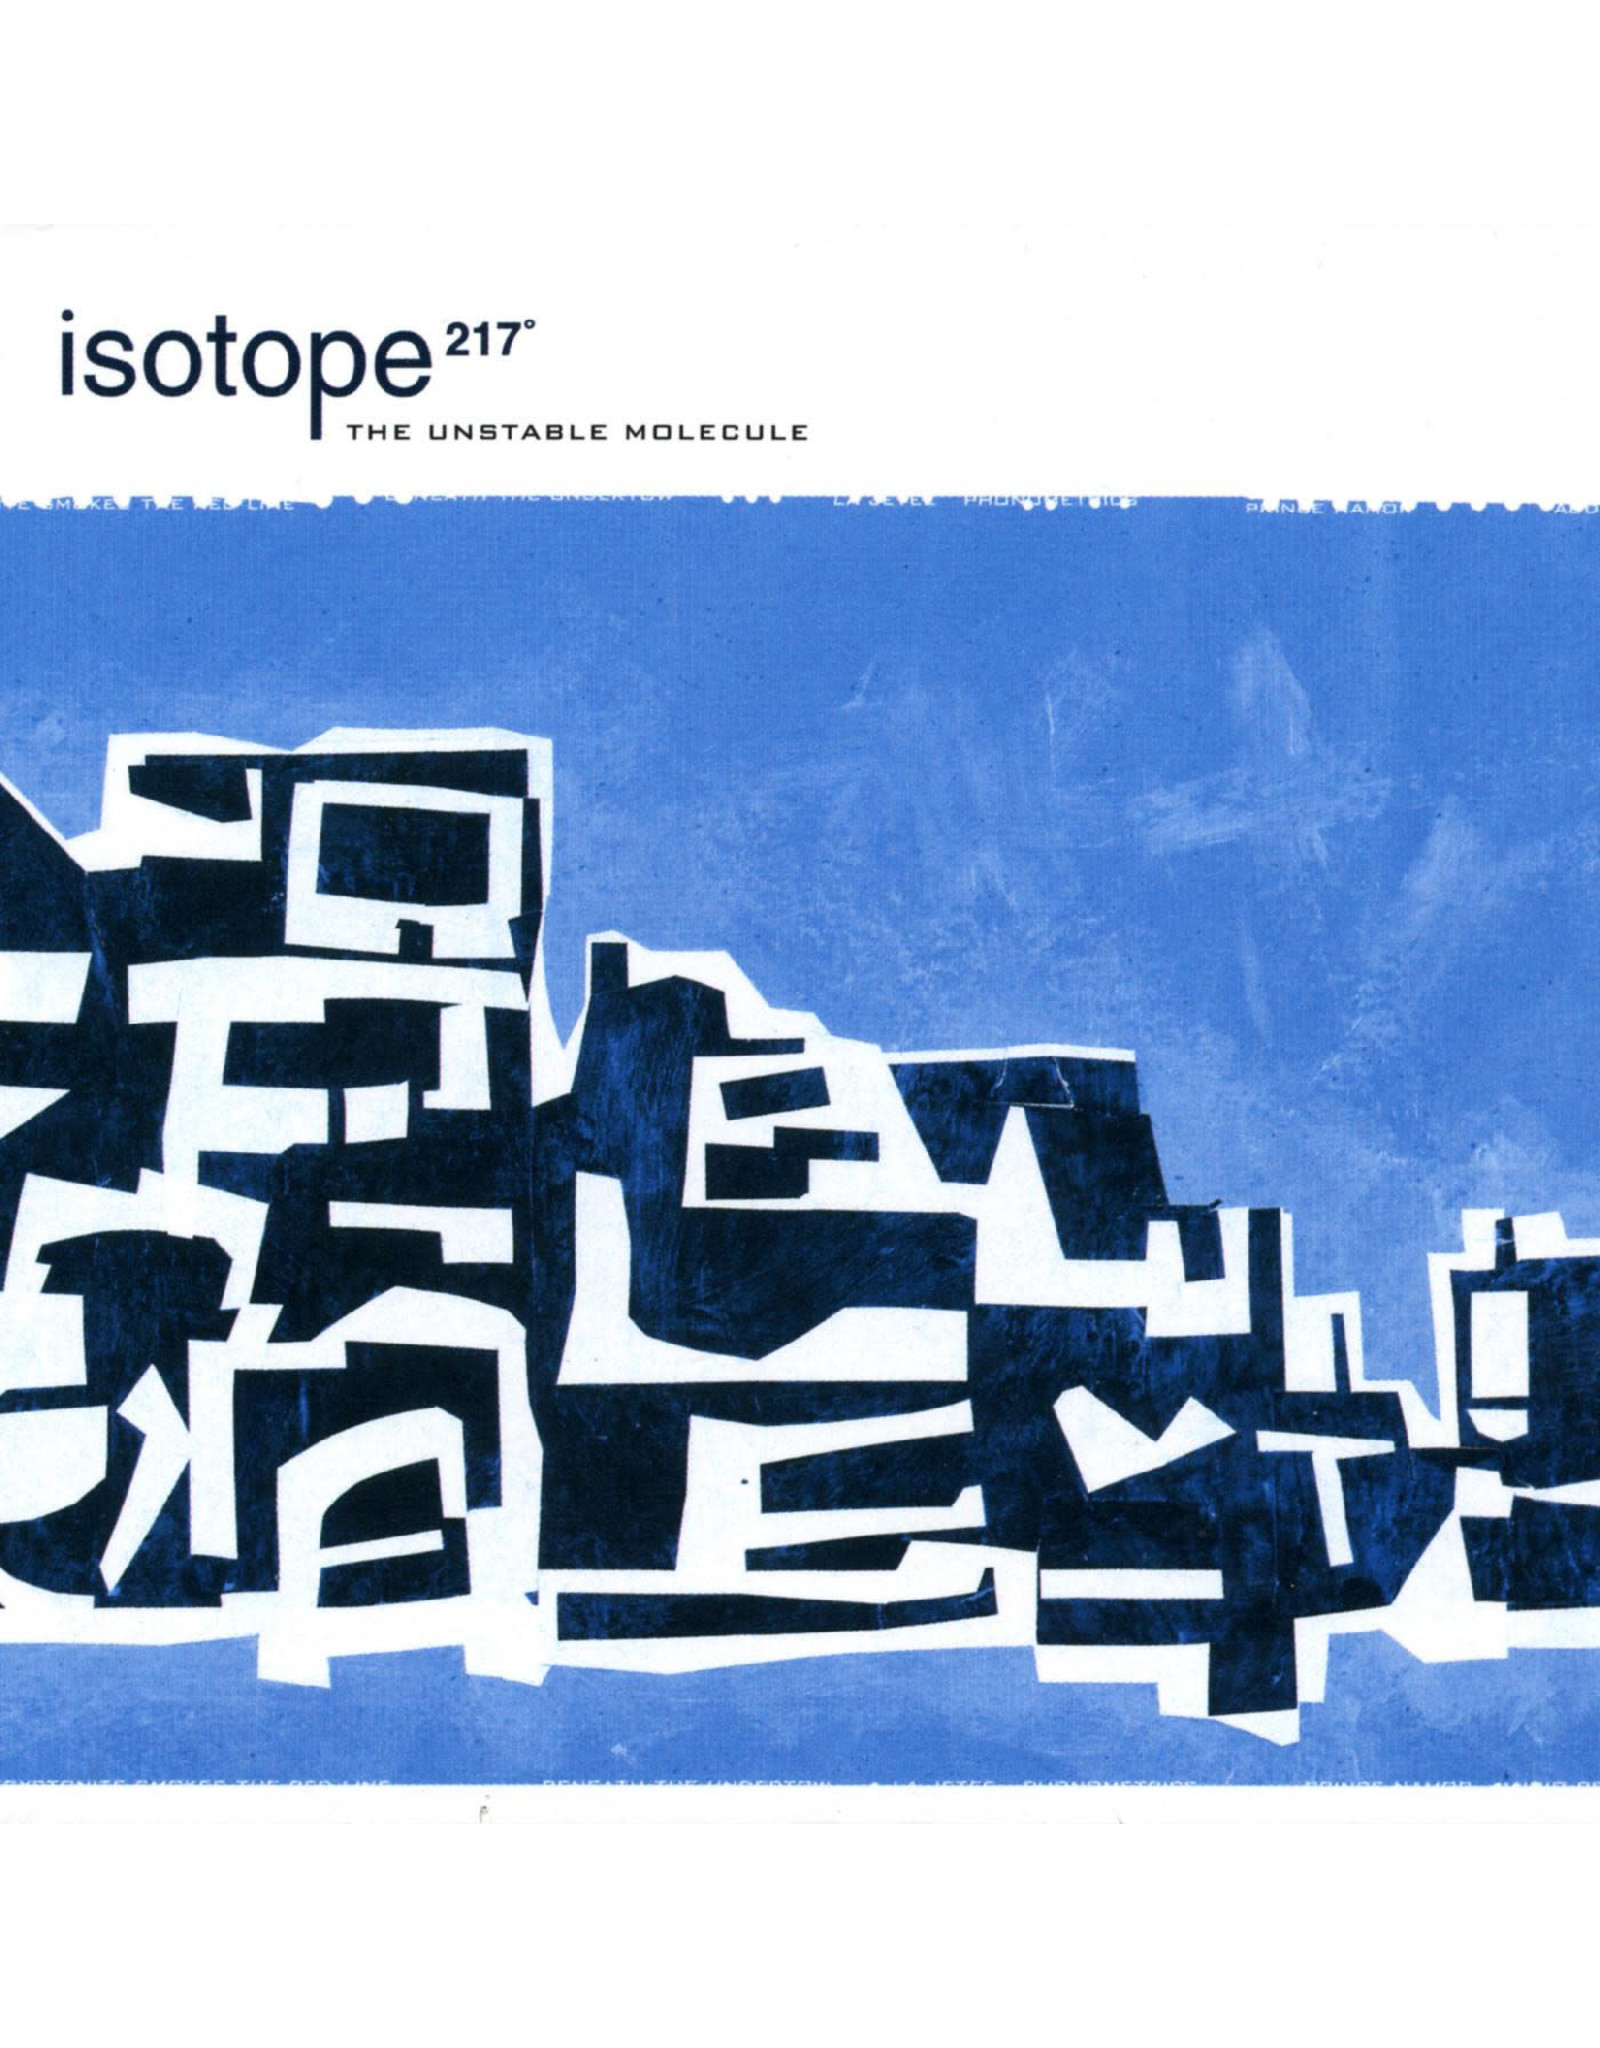 New Vinyl Isotope 217 - The Unstable Molecule (IEX, Blue) LP